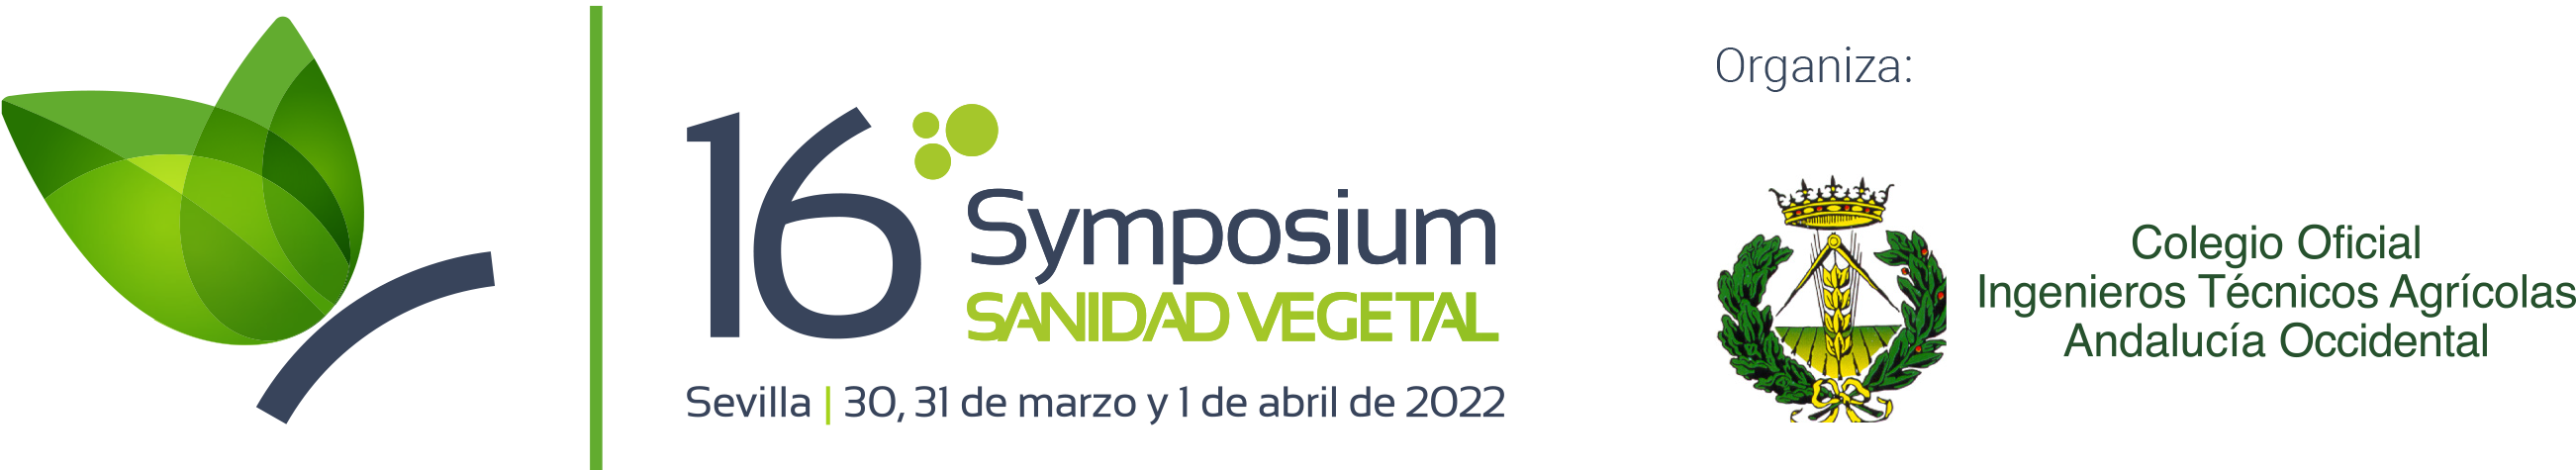 16º Symposium Sanidad Vegetal